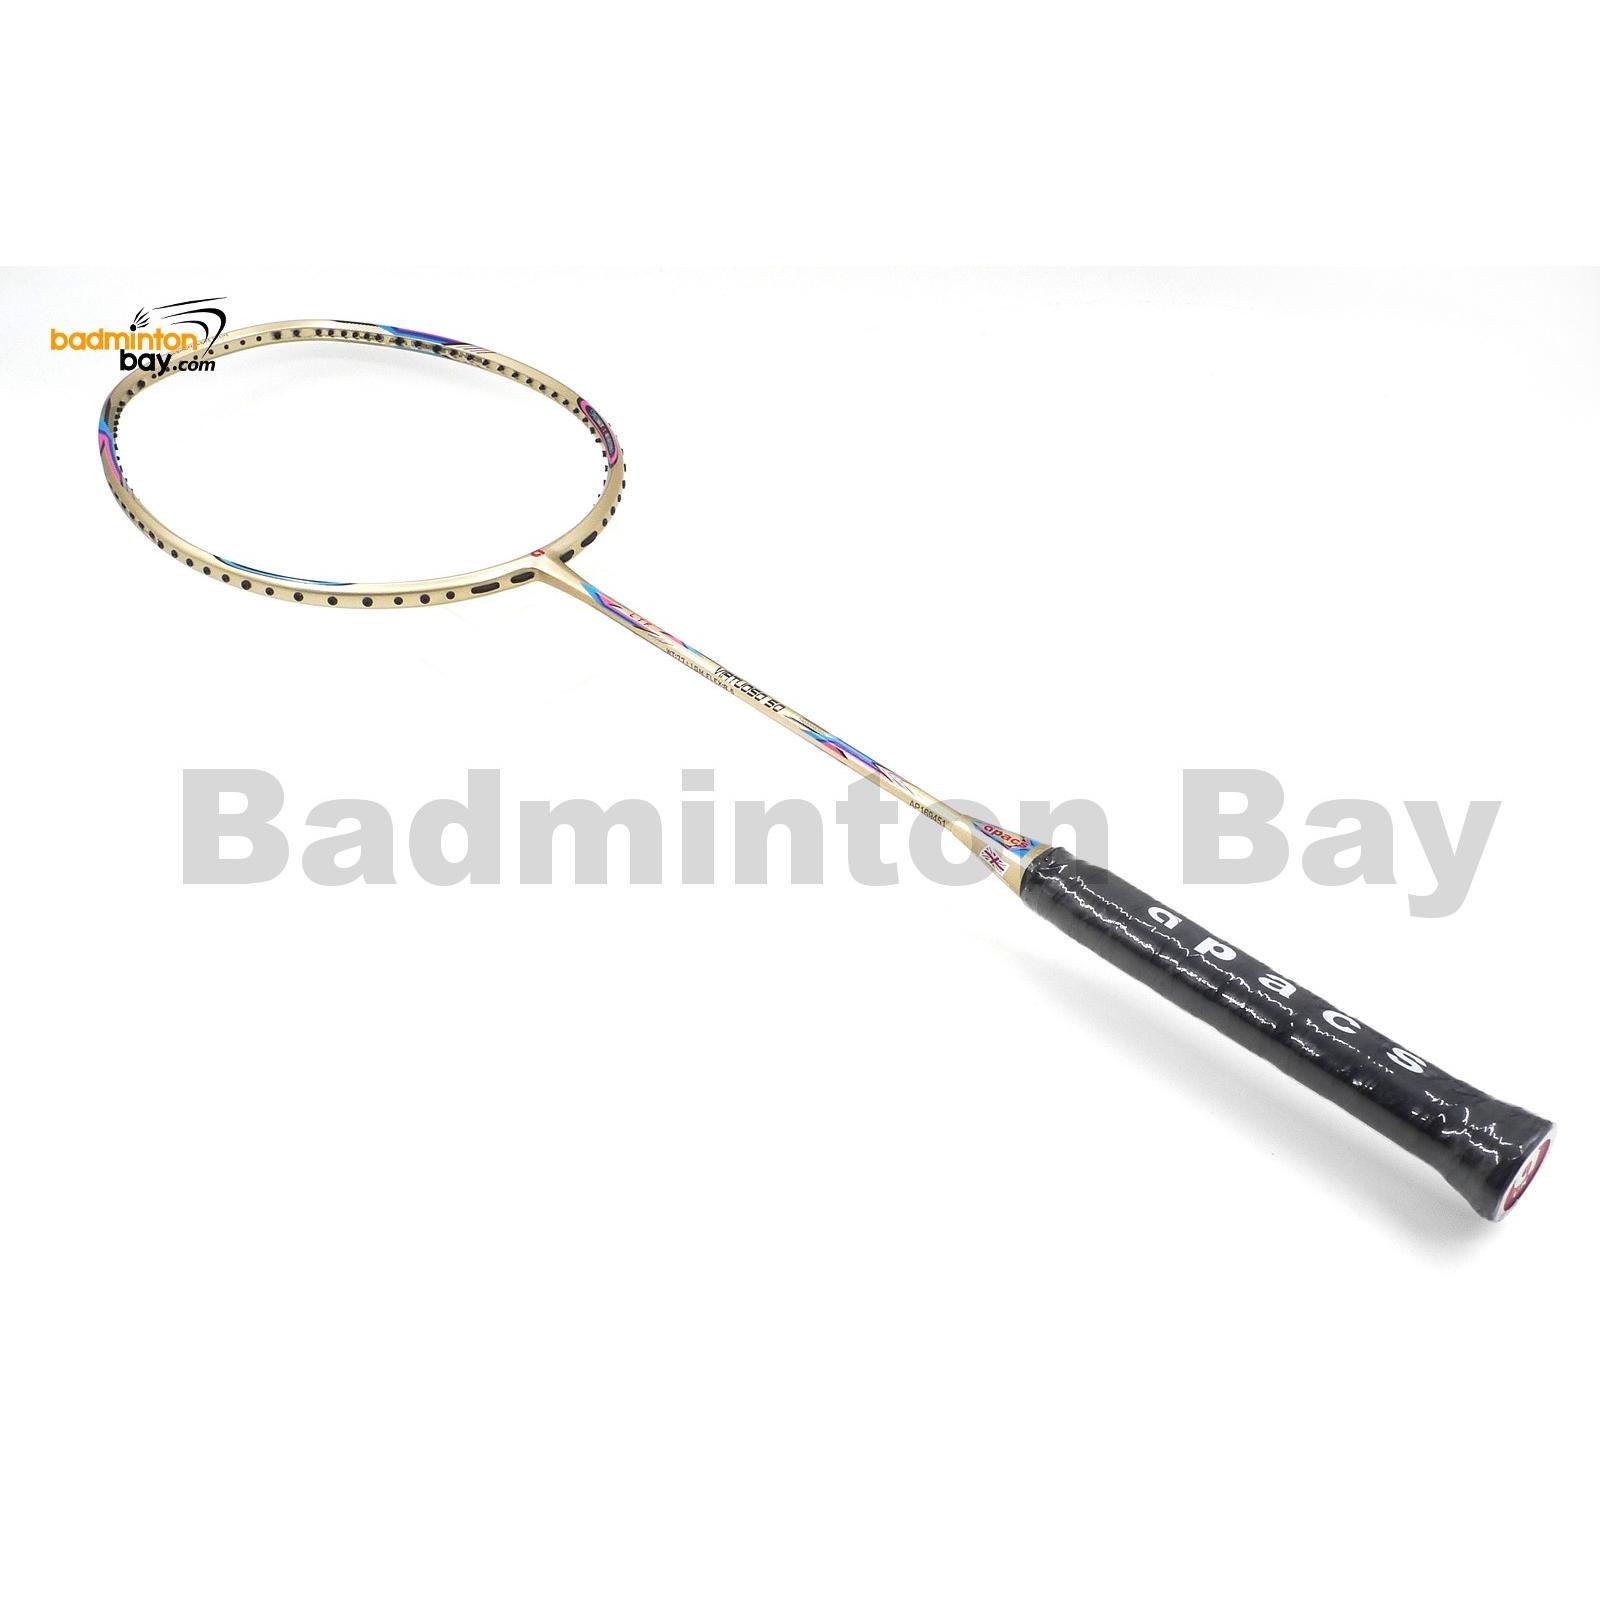 Apacs Virtuoso 50 Gold Badminton Racket (6U)